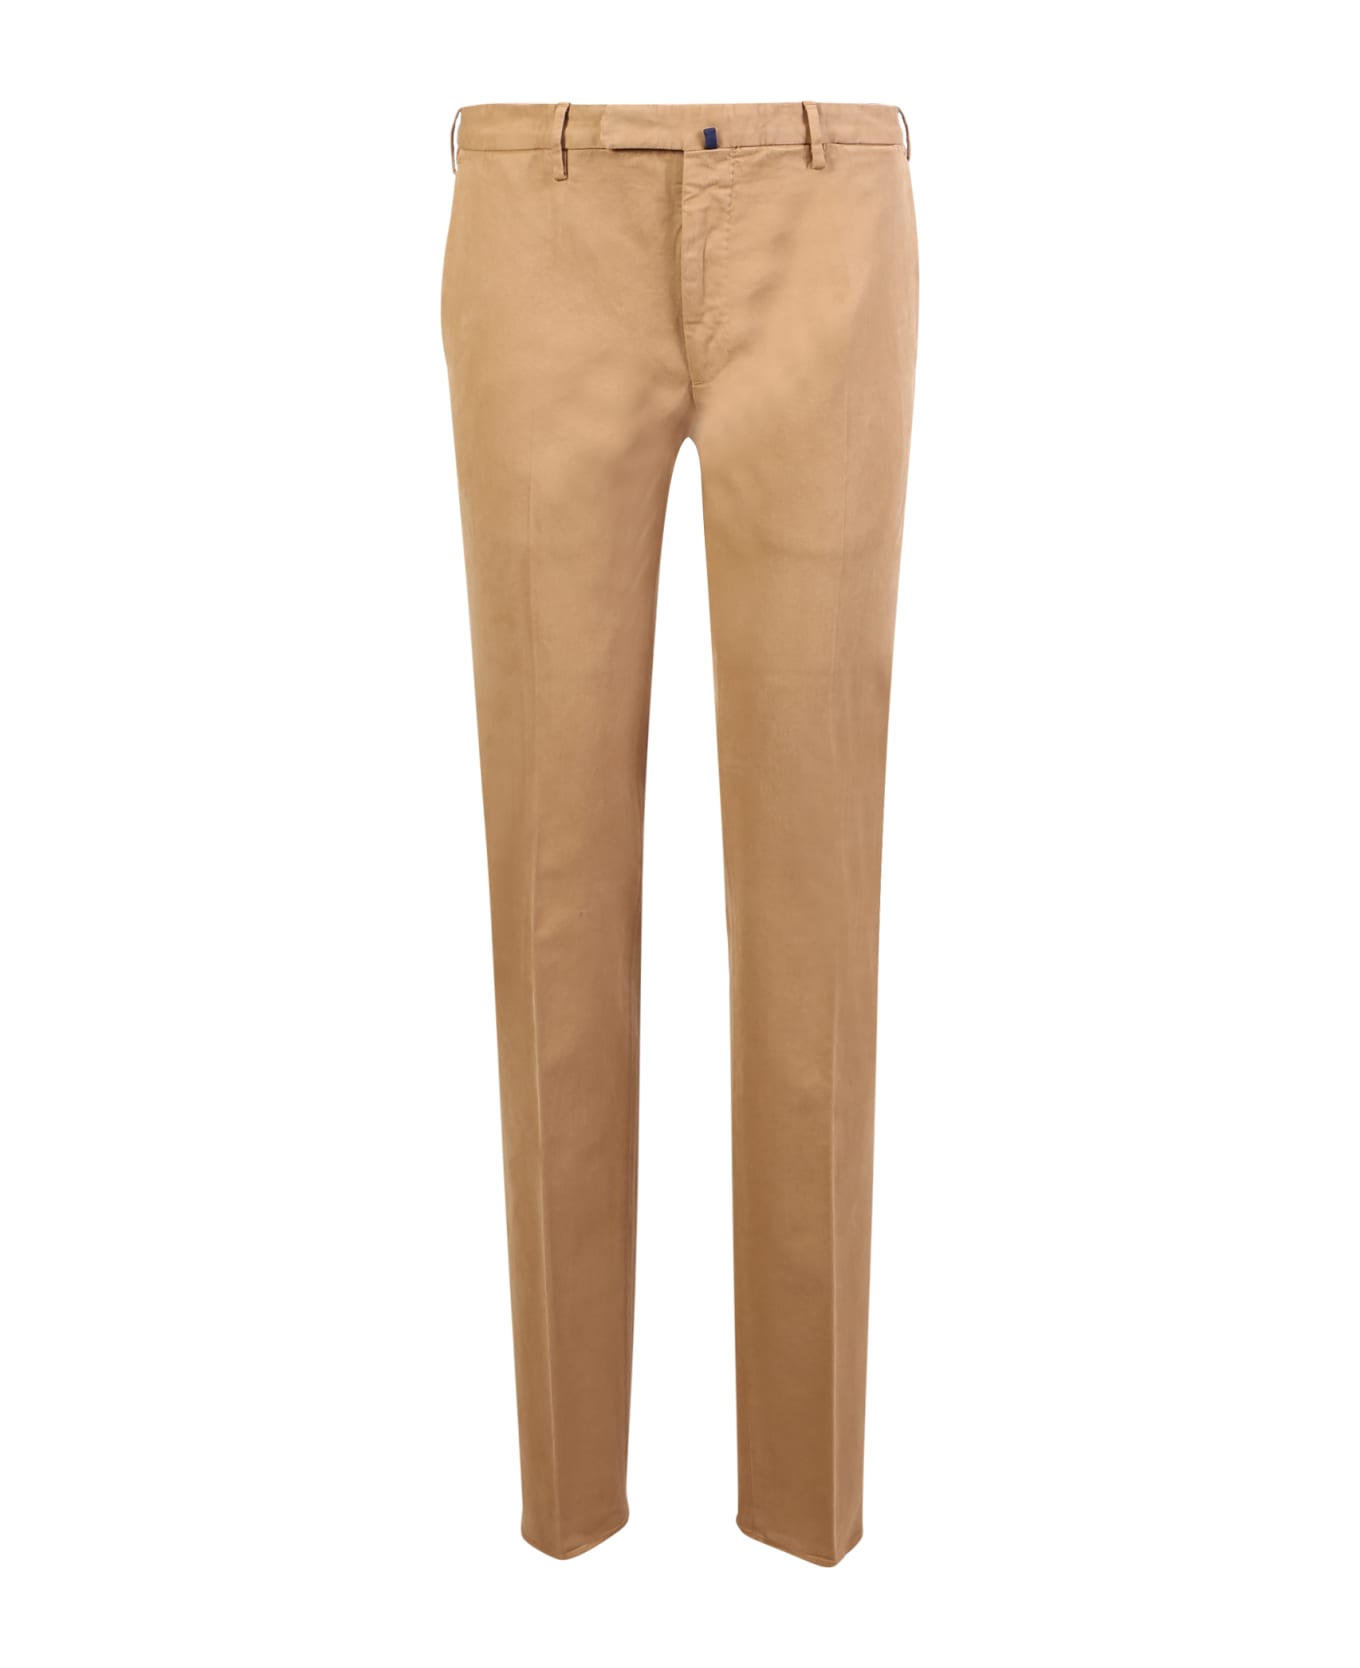 Incotex Beige Tailored Trousers - Beige